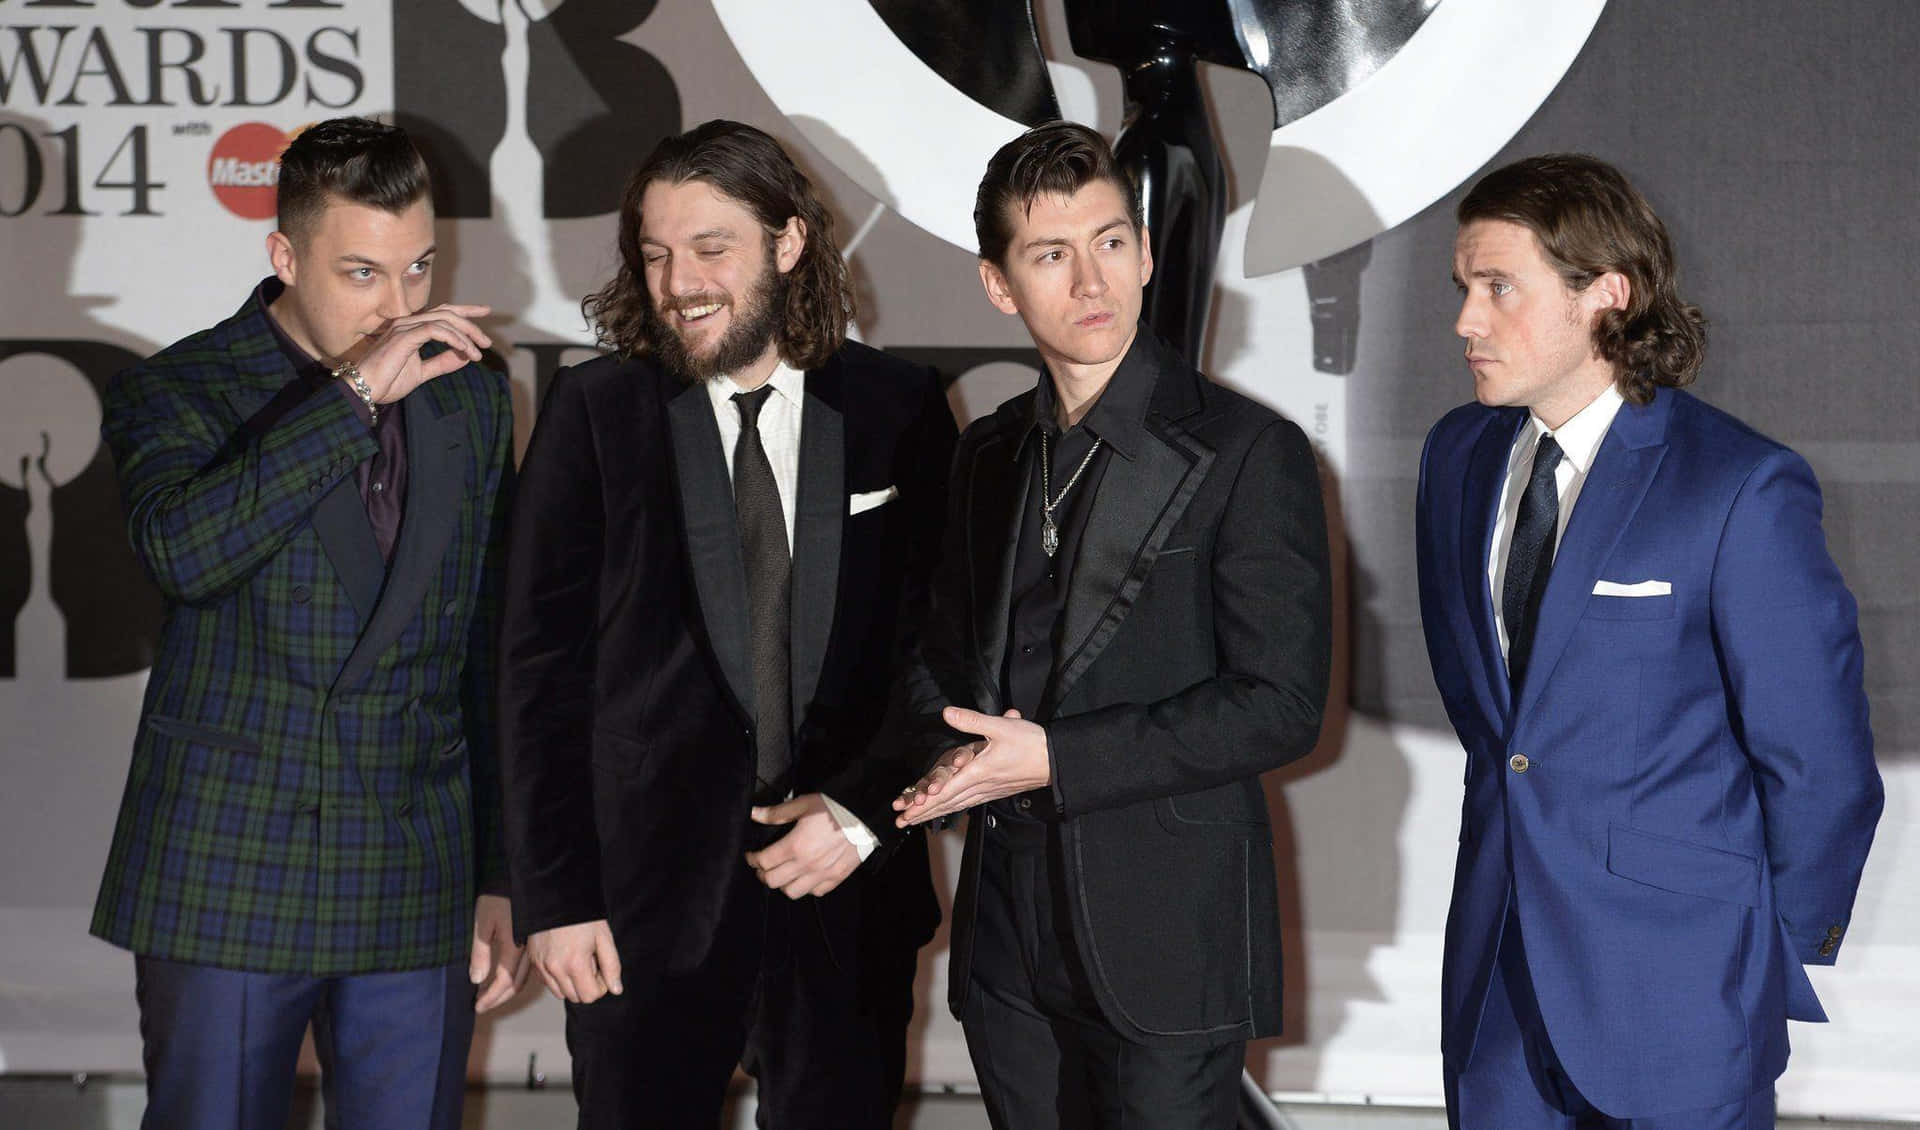 Arctic Monkeys B R I T Awards2014 Background